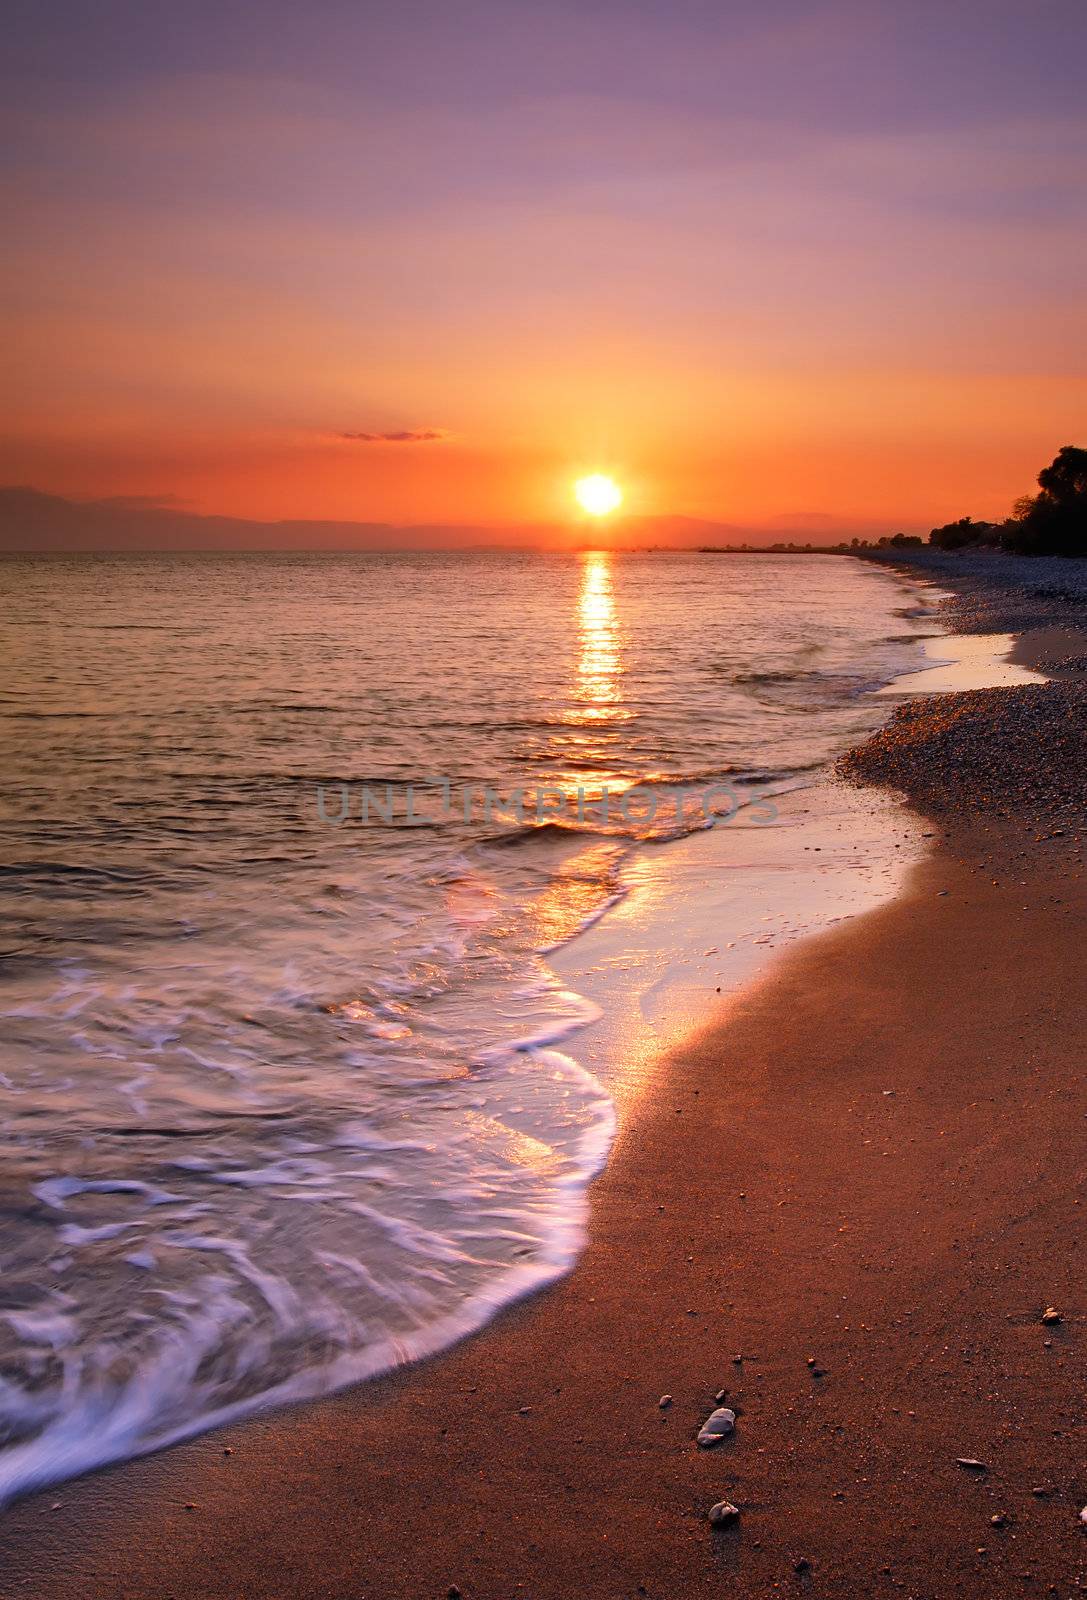 Deserted beach at sunset by akarelias